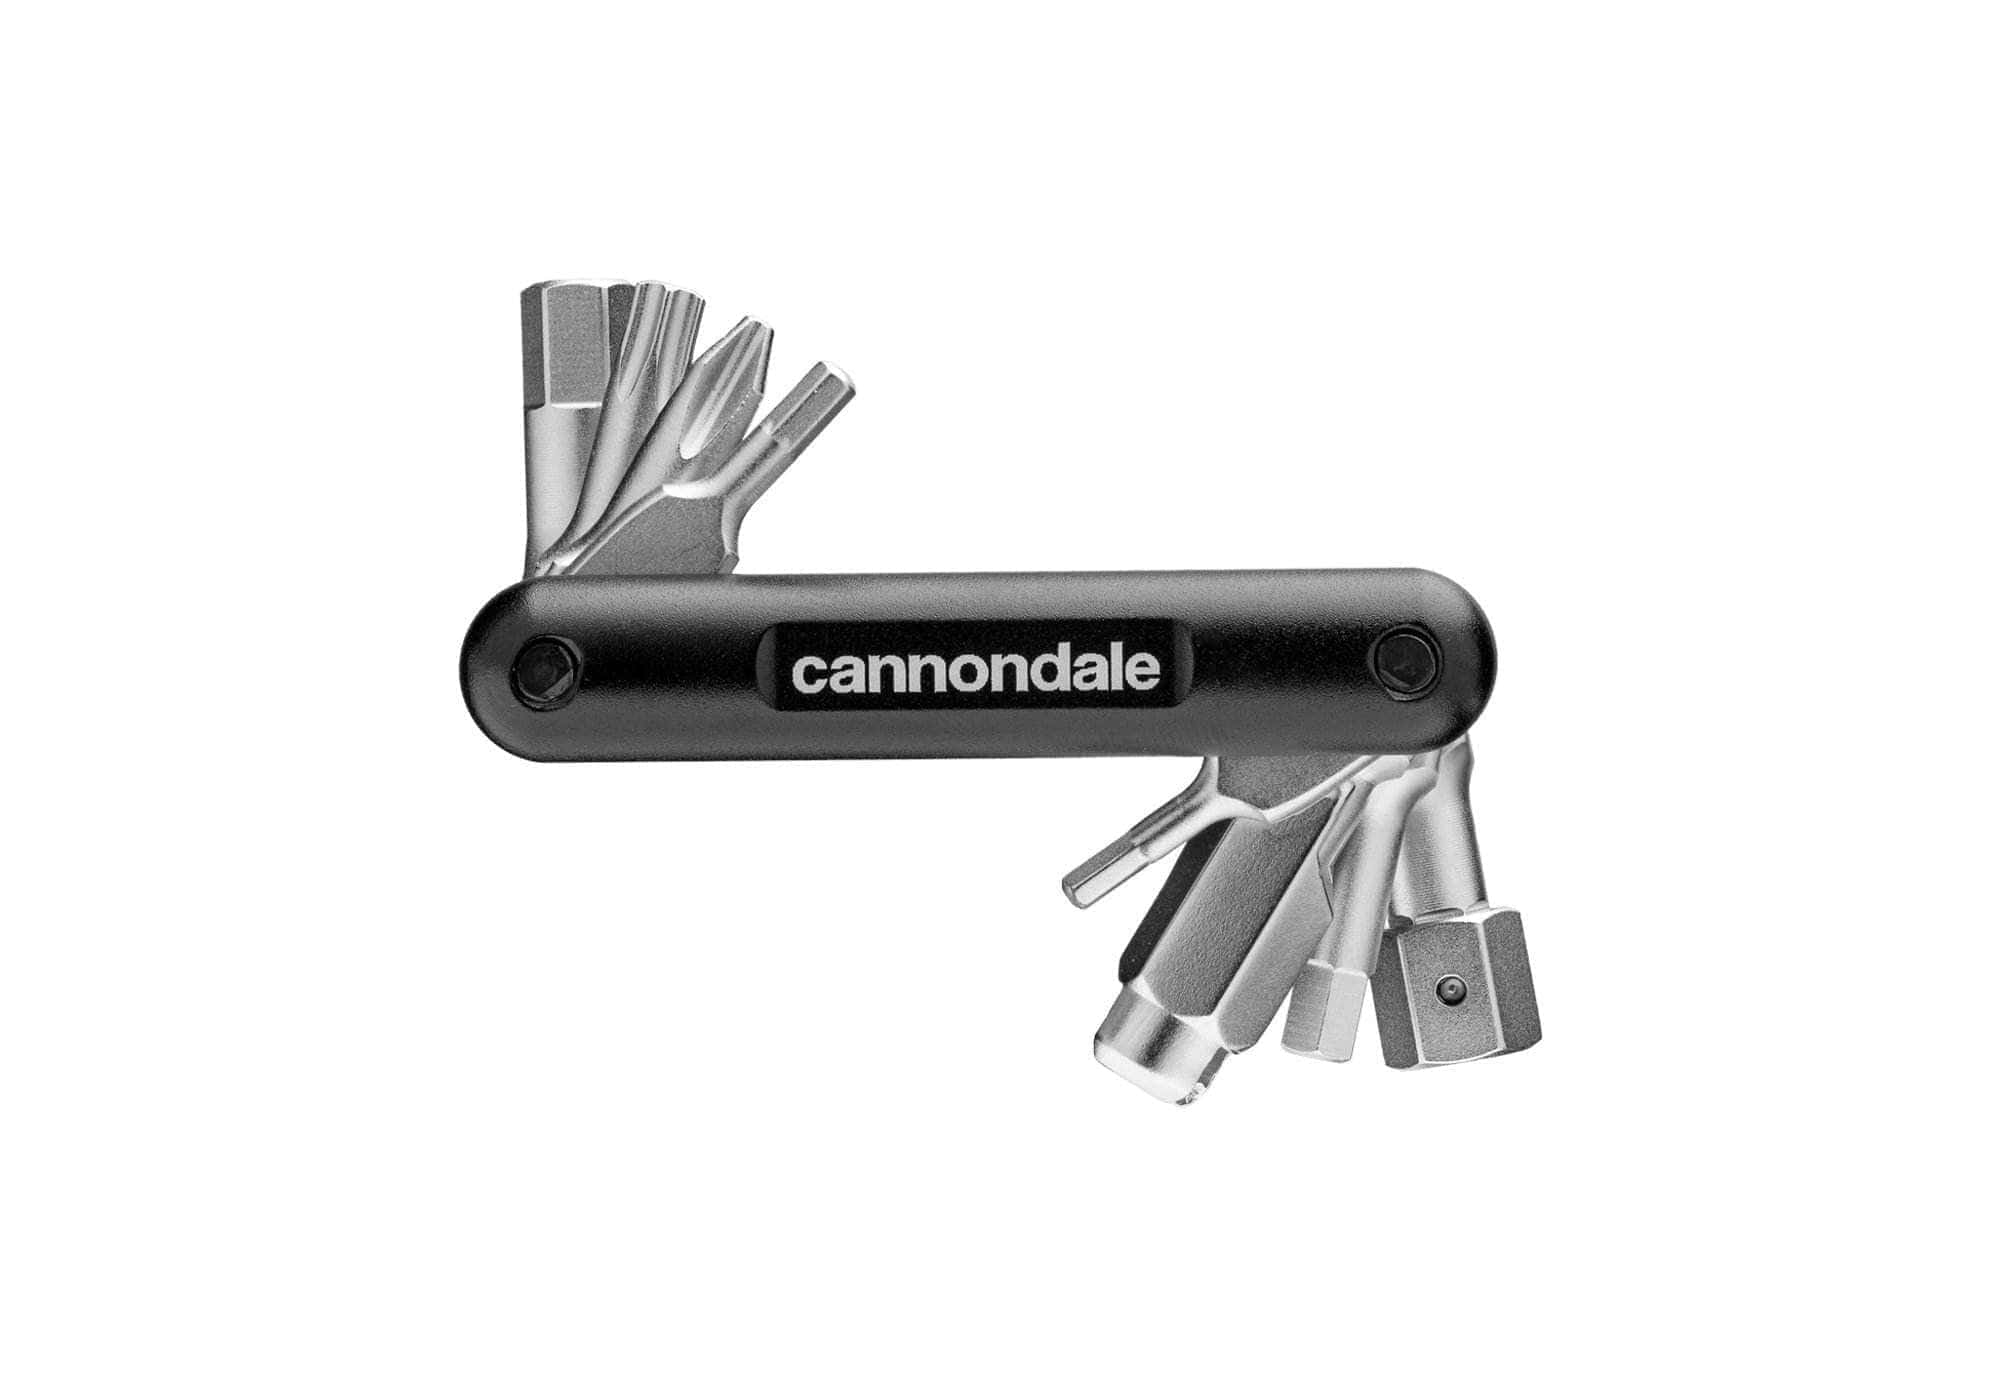 Cannondale Stash 10-in-1 Multi Tool Accessories - Tools - Multi-Tools